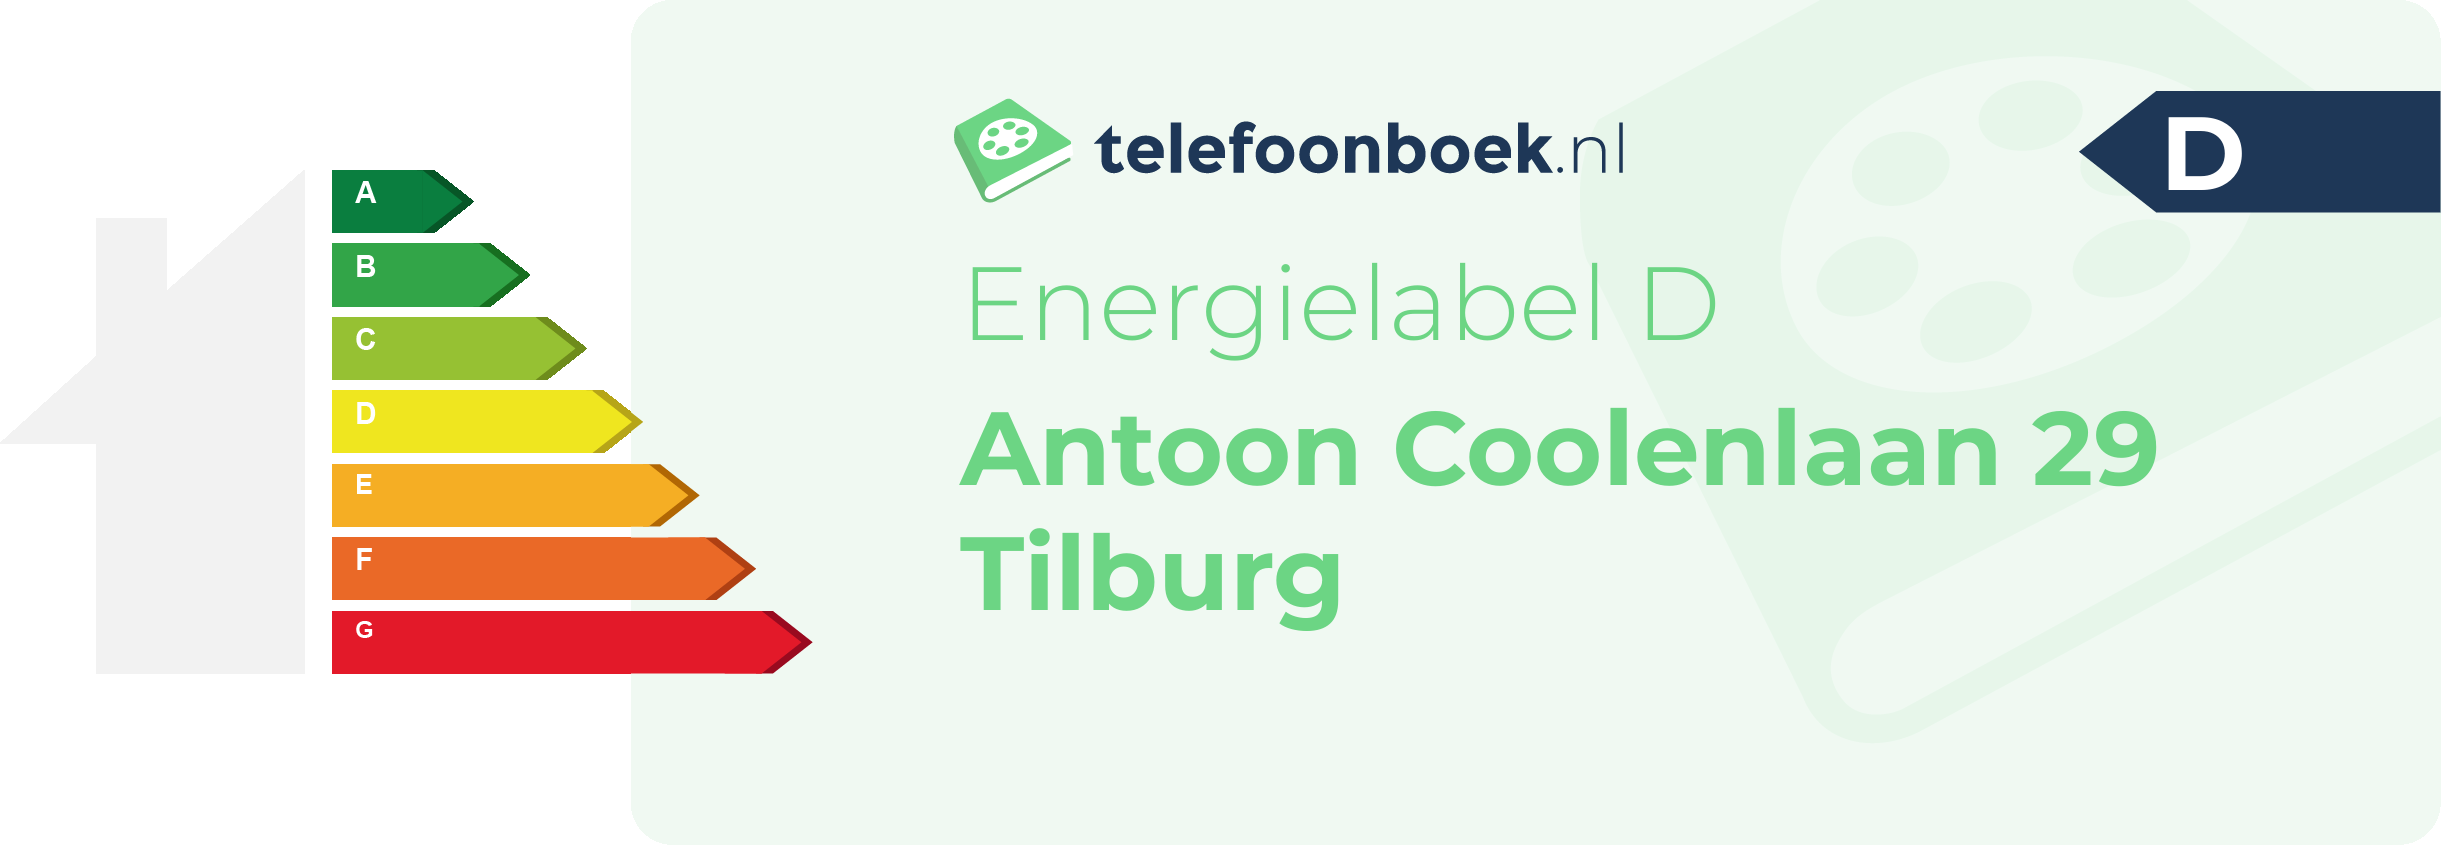 Energielabel Antoon Coolenlaan 29 Tilburg